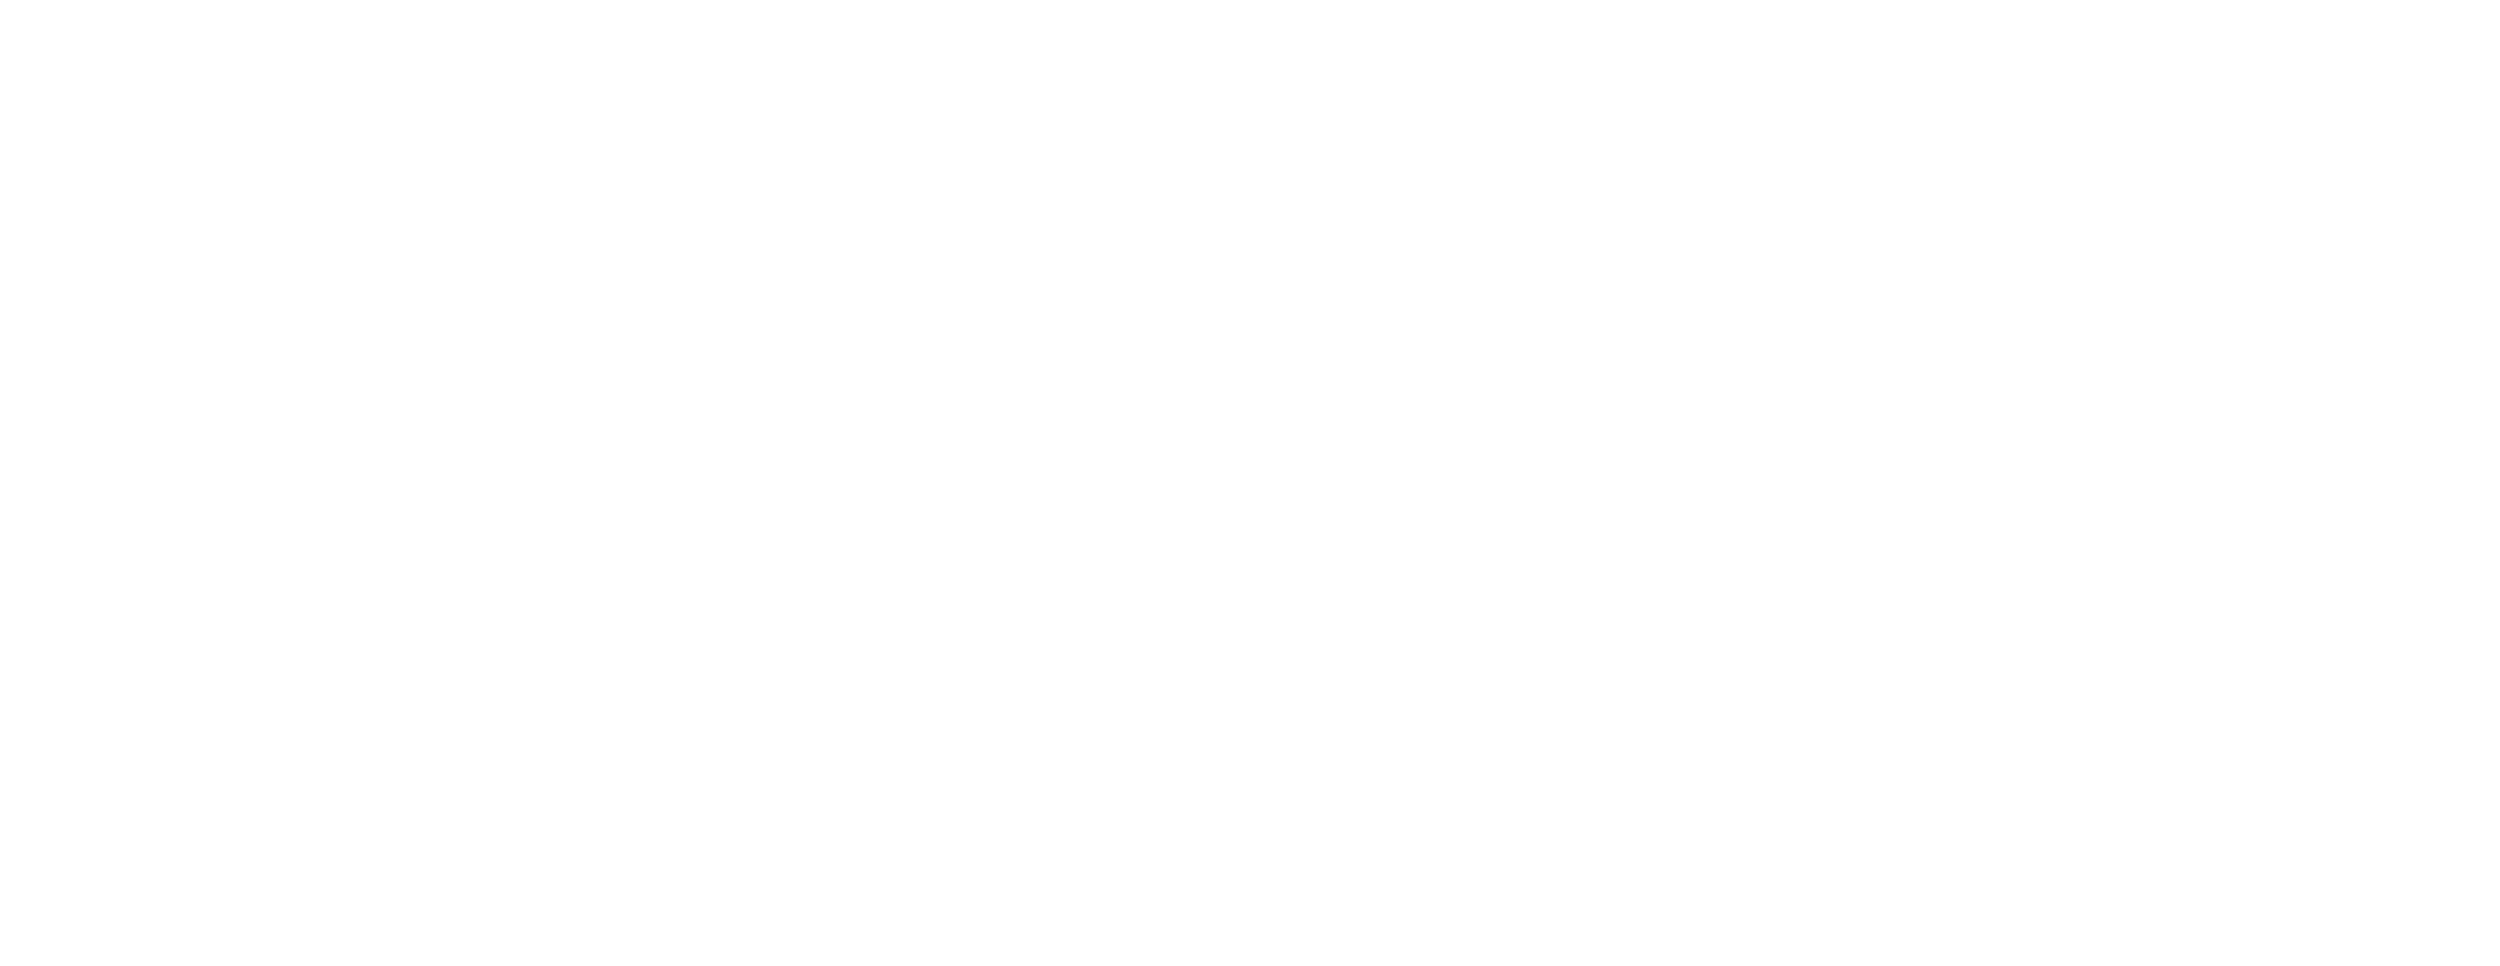 Santa Barbara Commercial Mortgage, Inc.